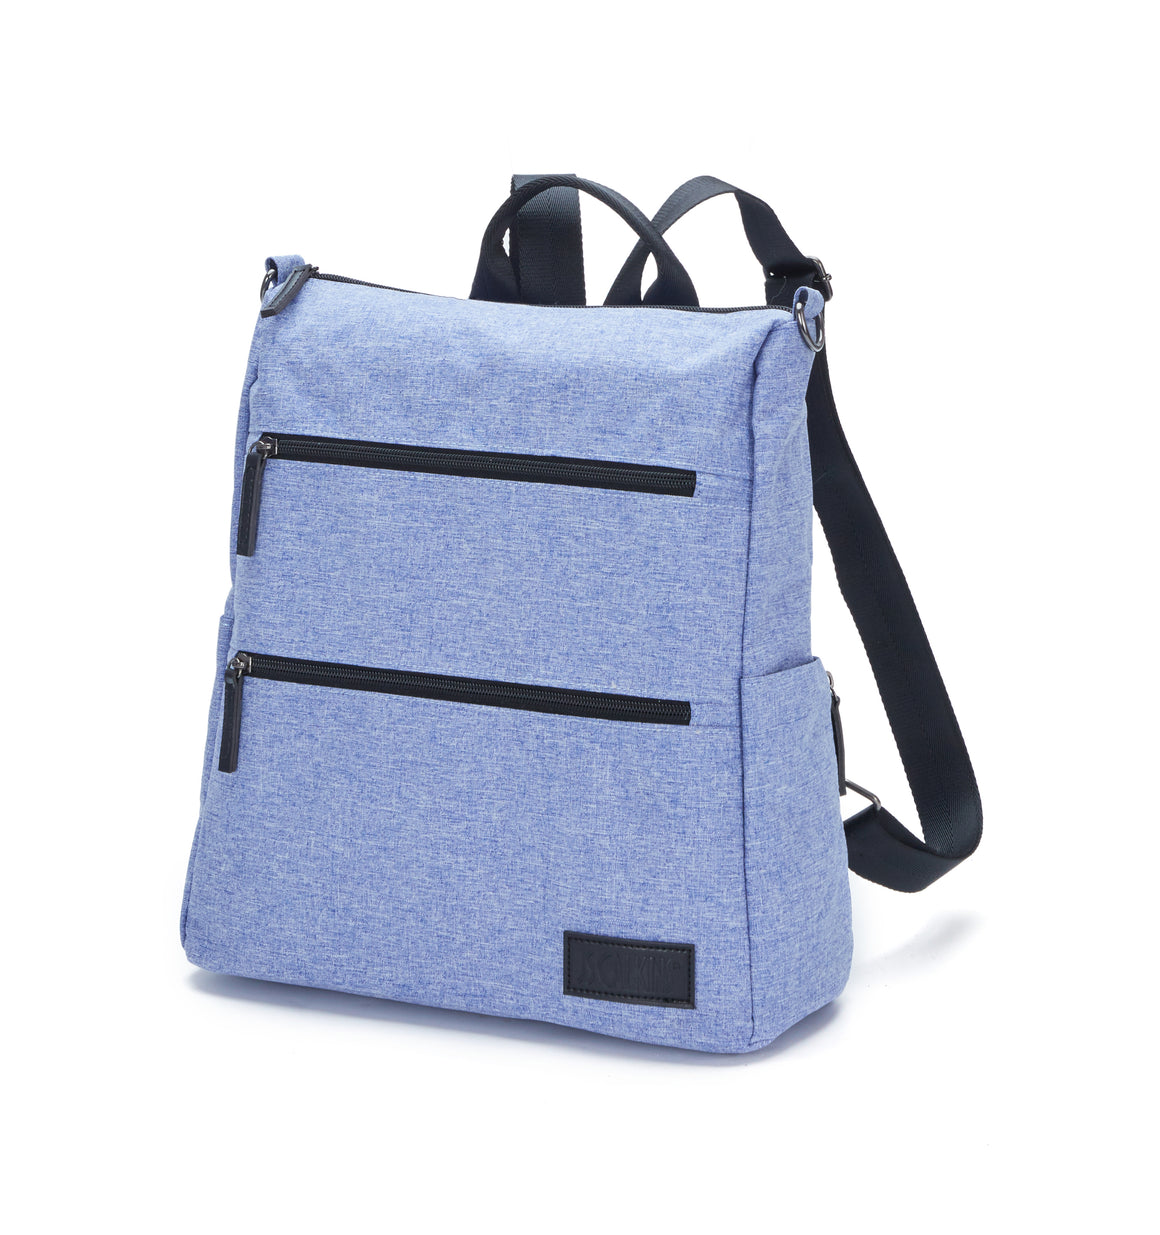 Multi-Function Backpack